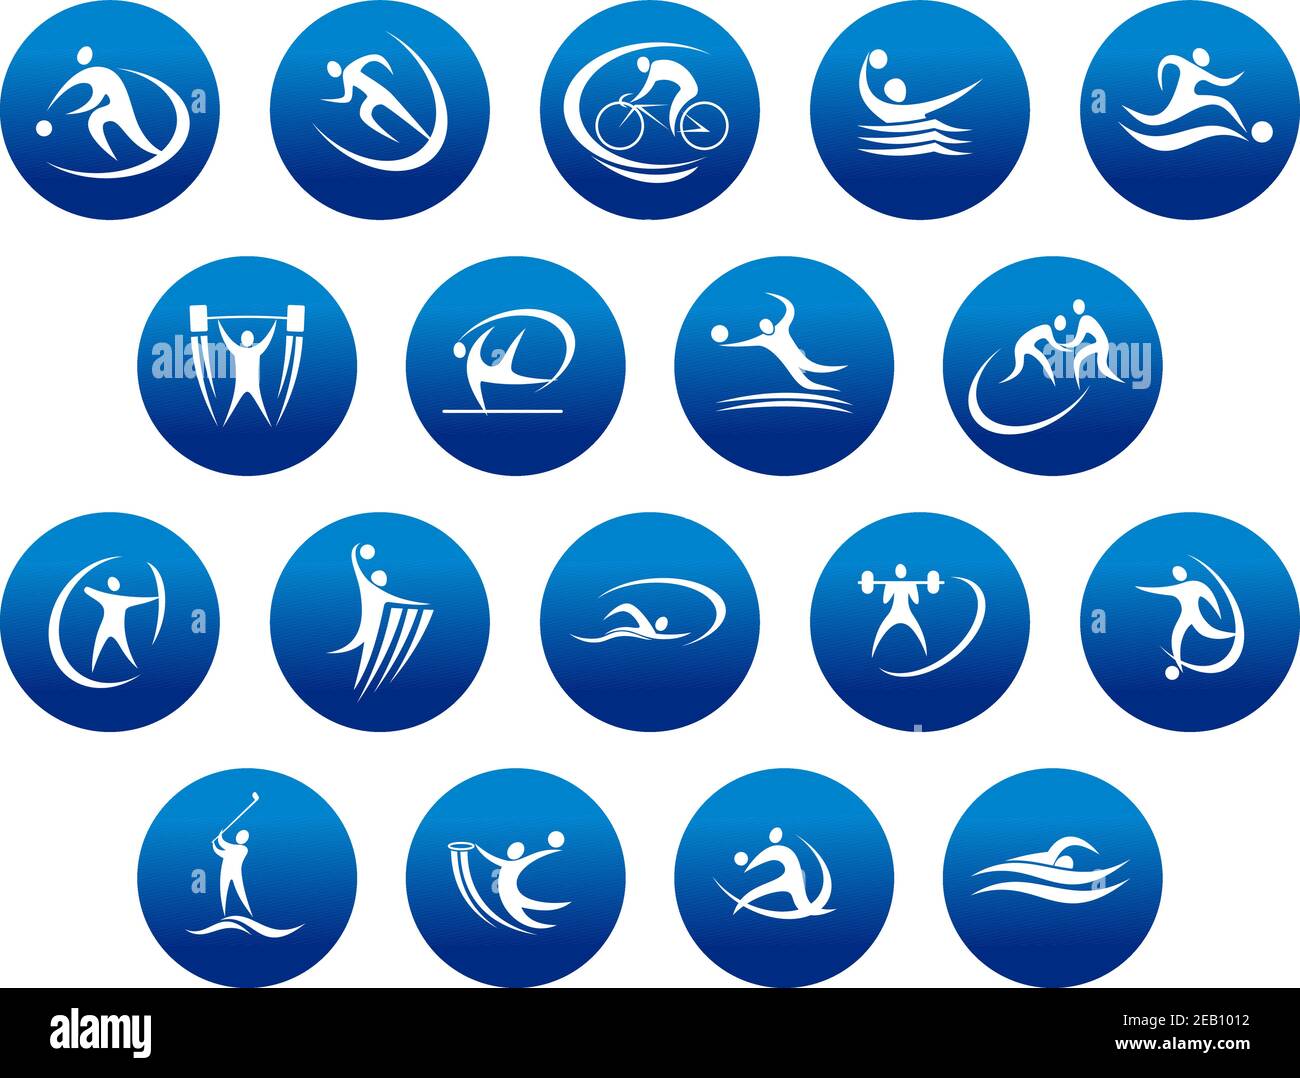 https://c8.alamy.com/comp/2EB1012/athletics-and-team-sport-icons-or-symbols-for-sporting-and-fitness-logo-design-2EB1012.jpg